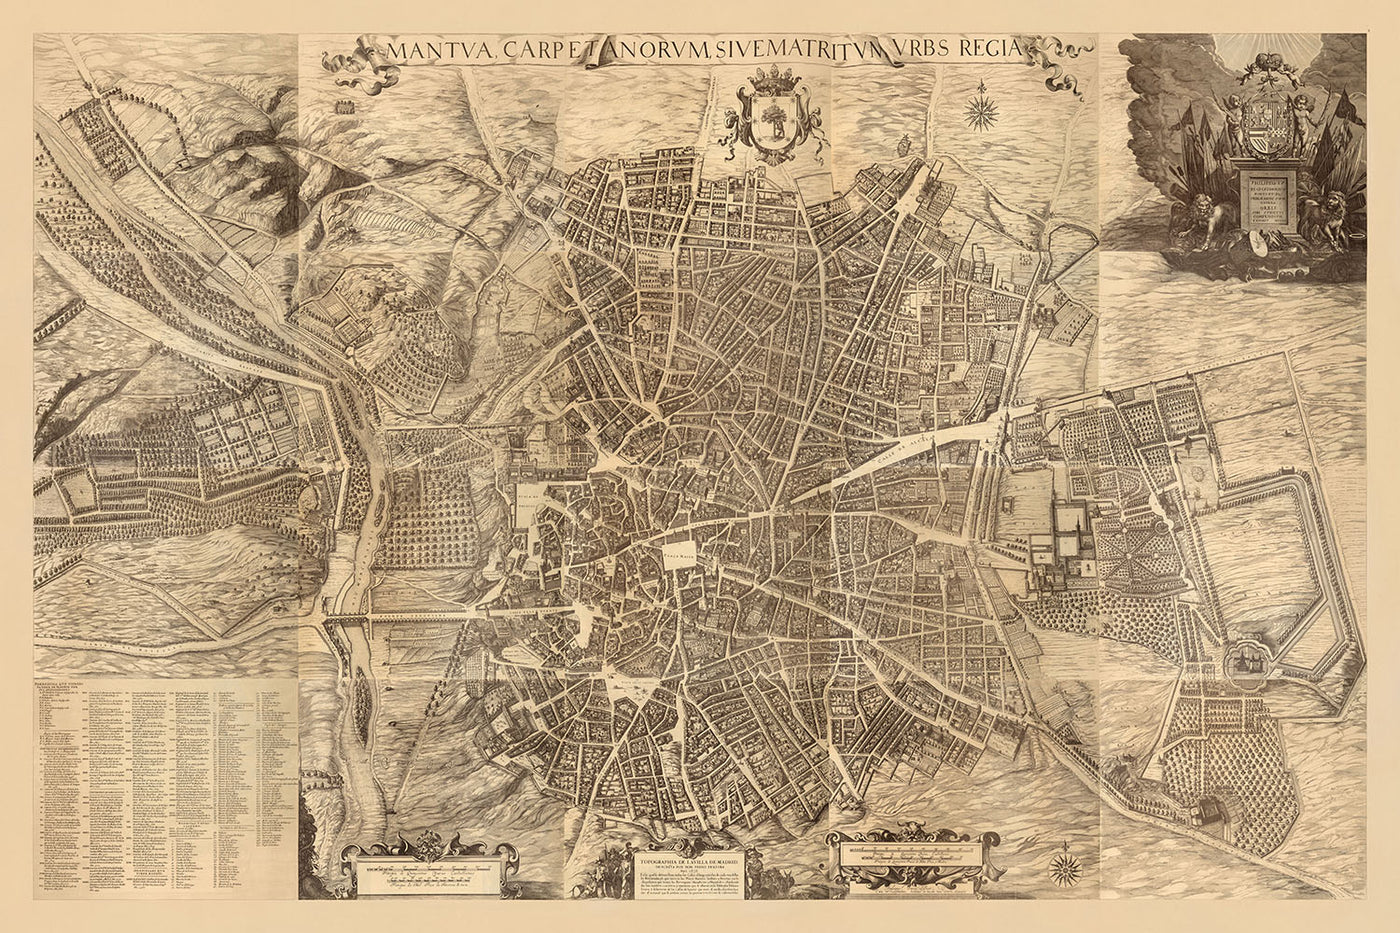 Ancienne carte de Madrid par Teixeira, 1656 : Plaza Mayor, Calle Mayor, Calle de Alcalá, grandes églises, couvents